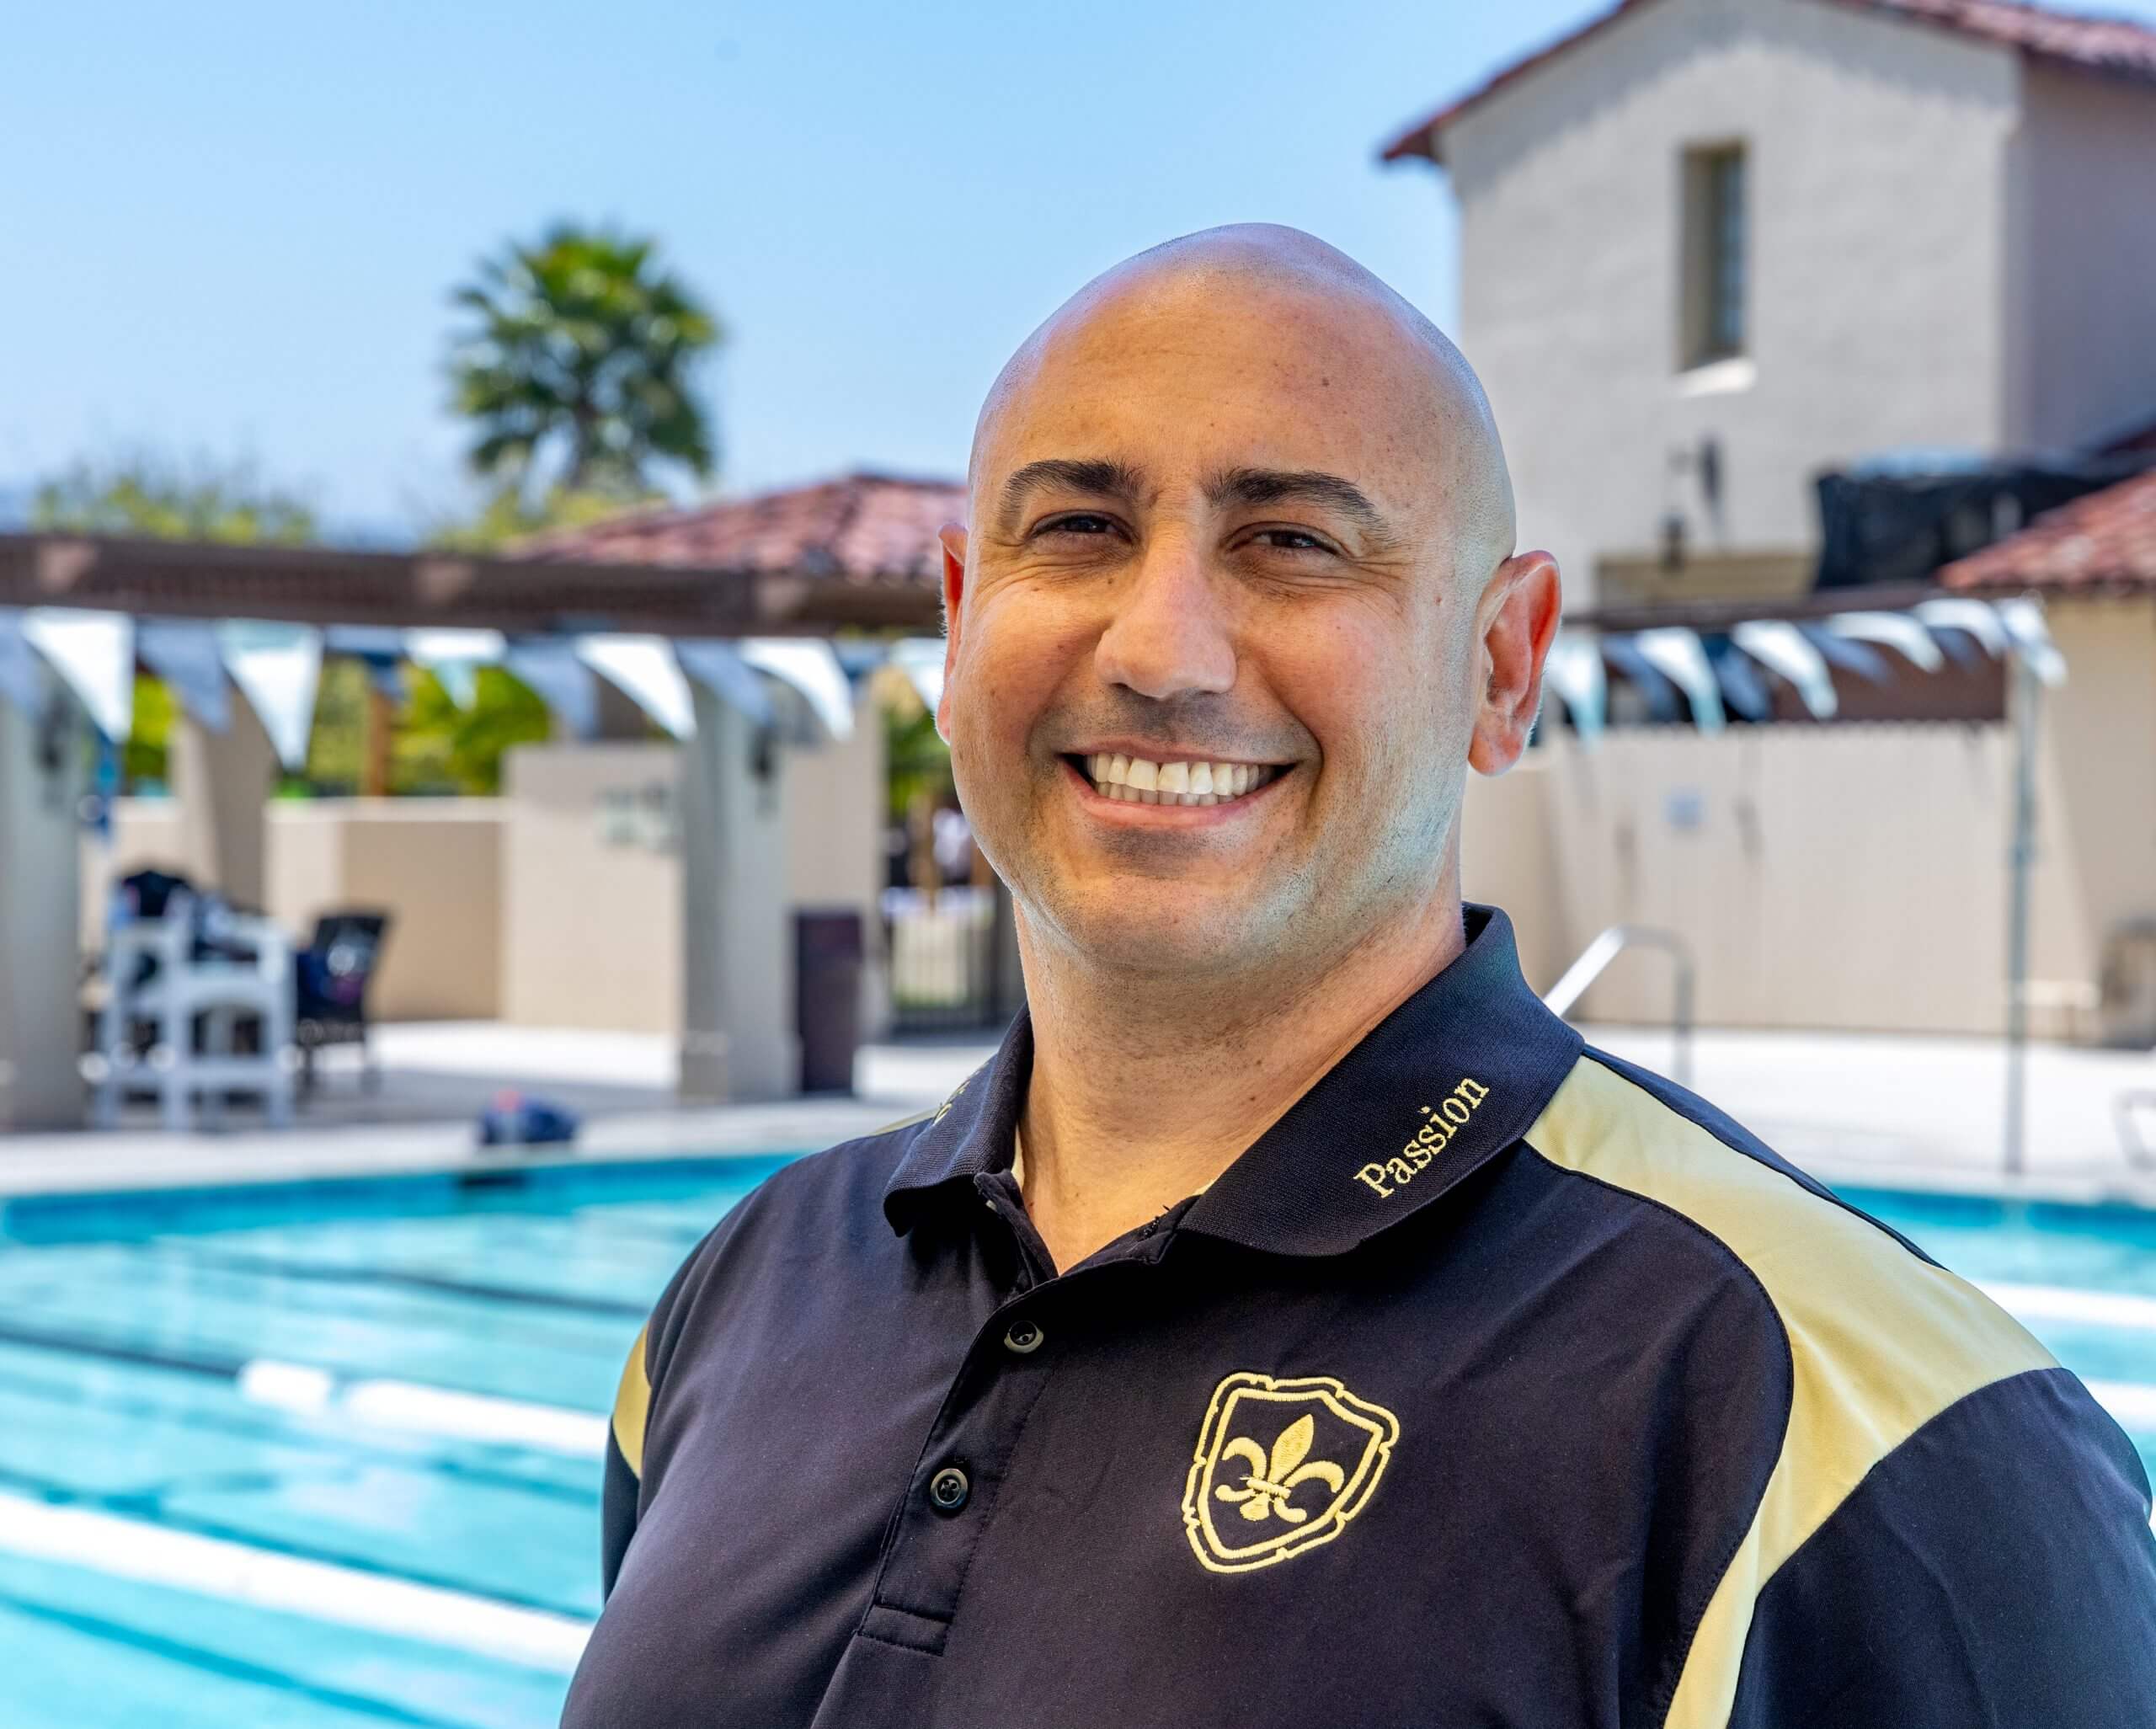 Paseo Aquatics Hires Coach Marco Bellardi to Lead New International Competitive Training Program